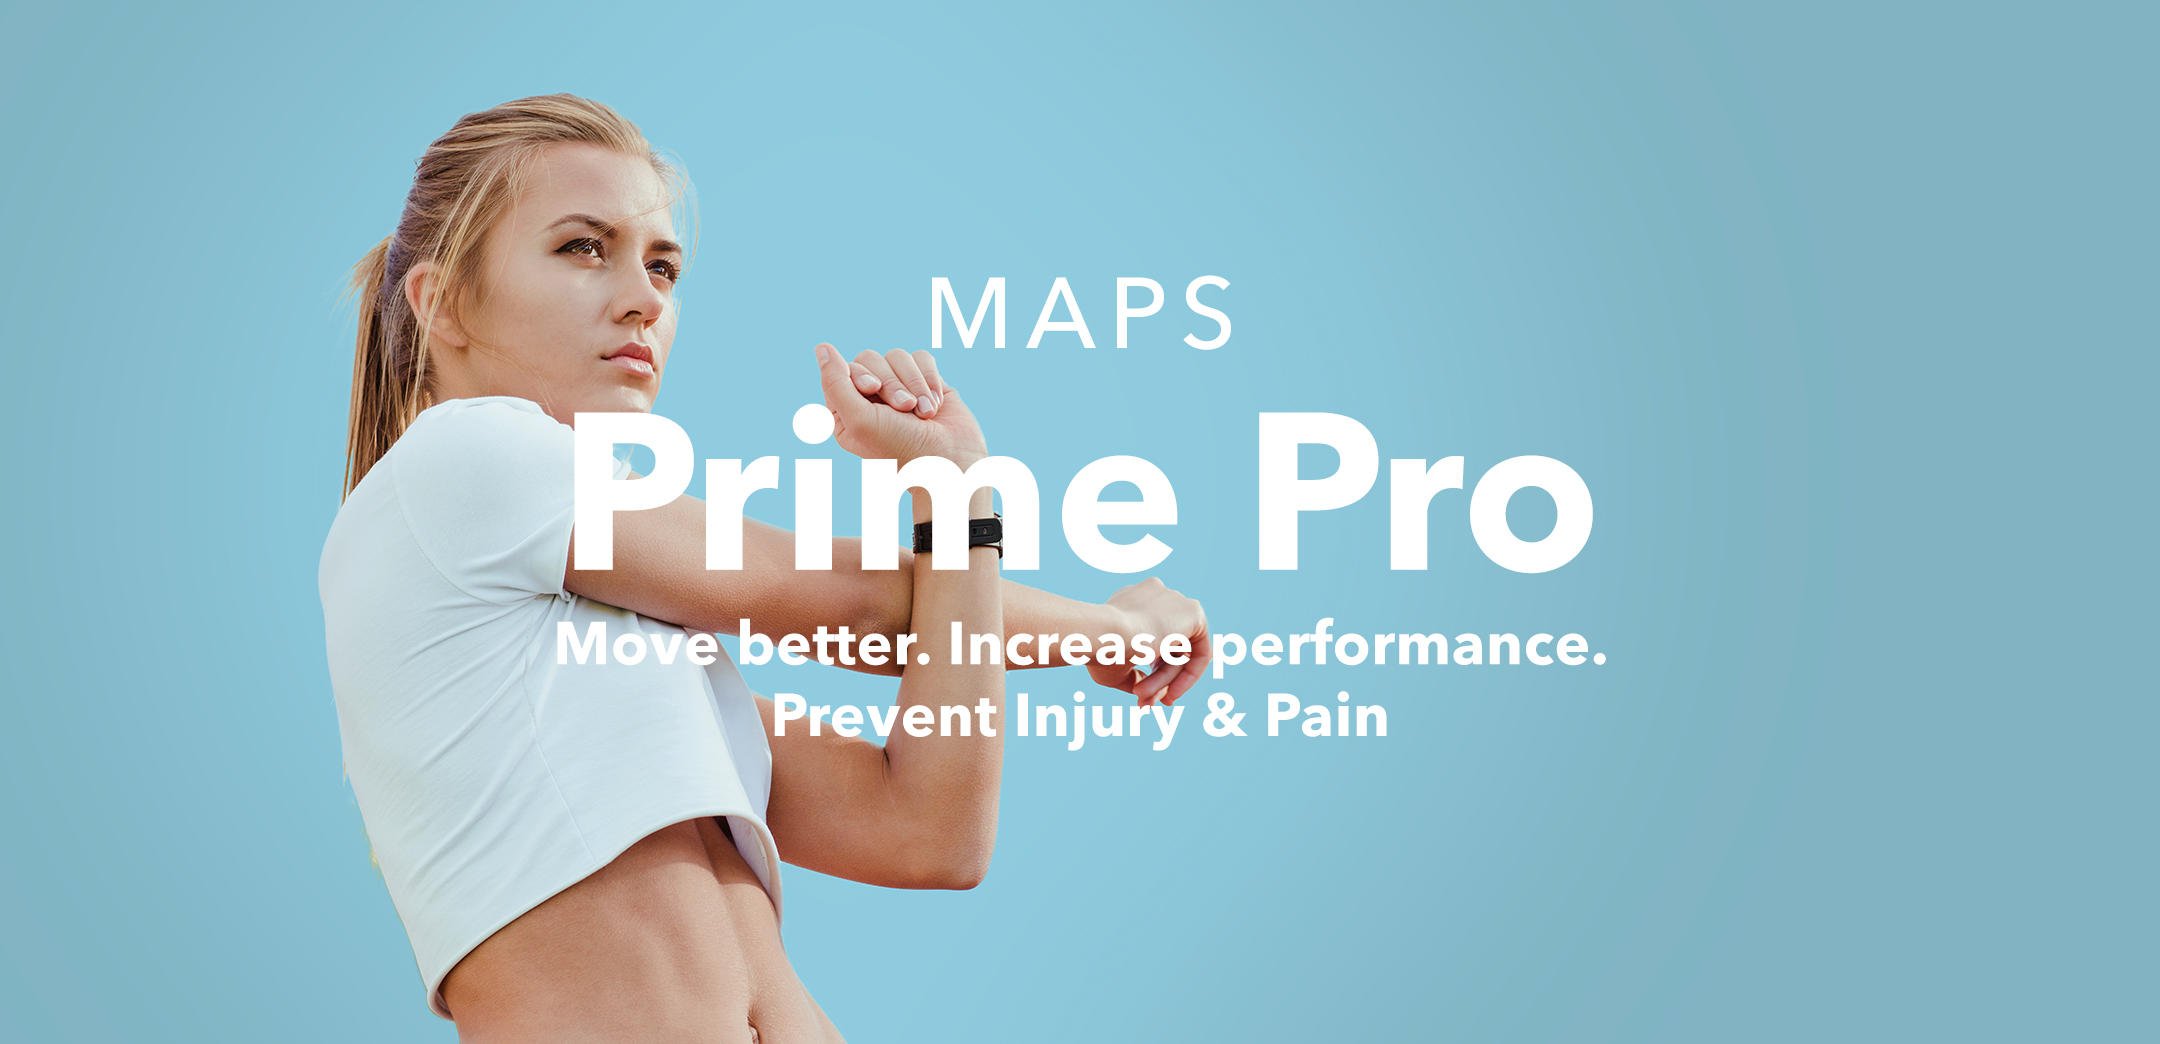 Prime Pro Image